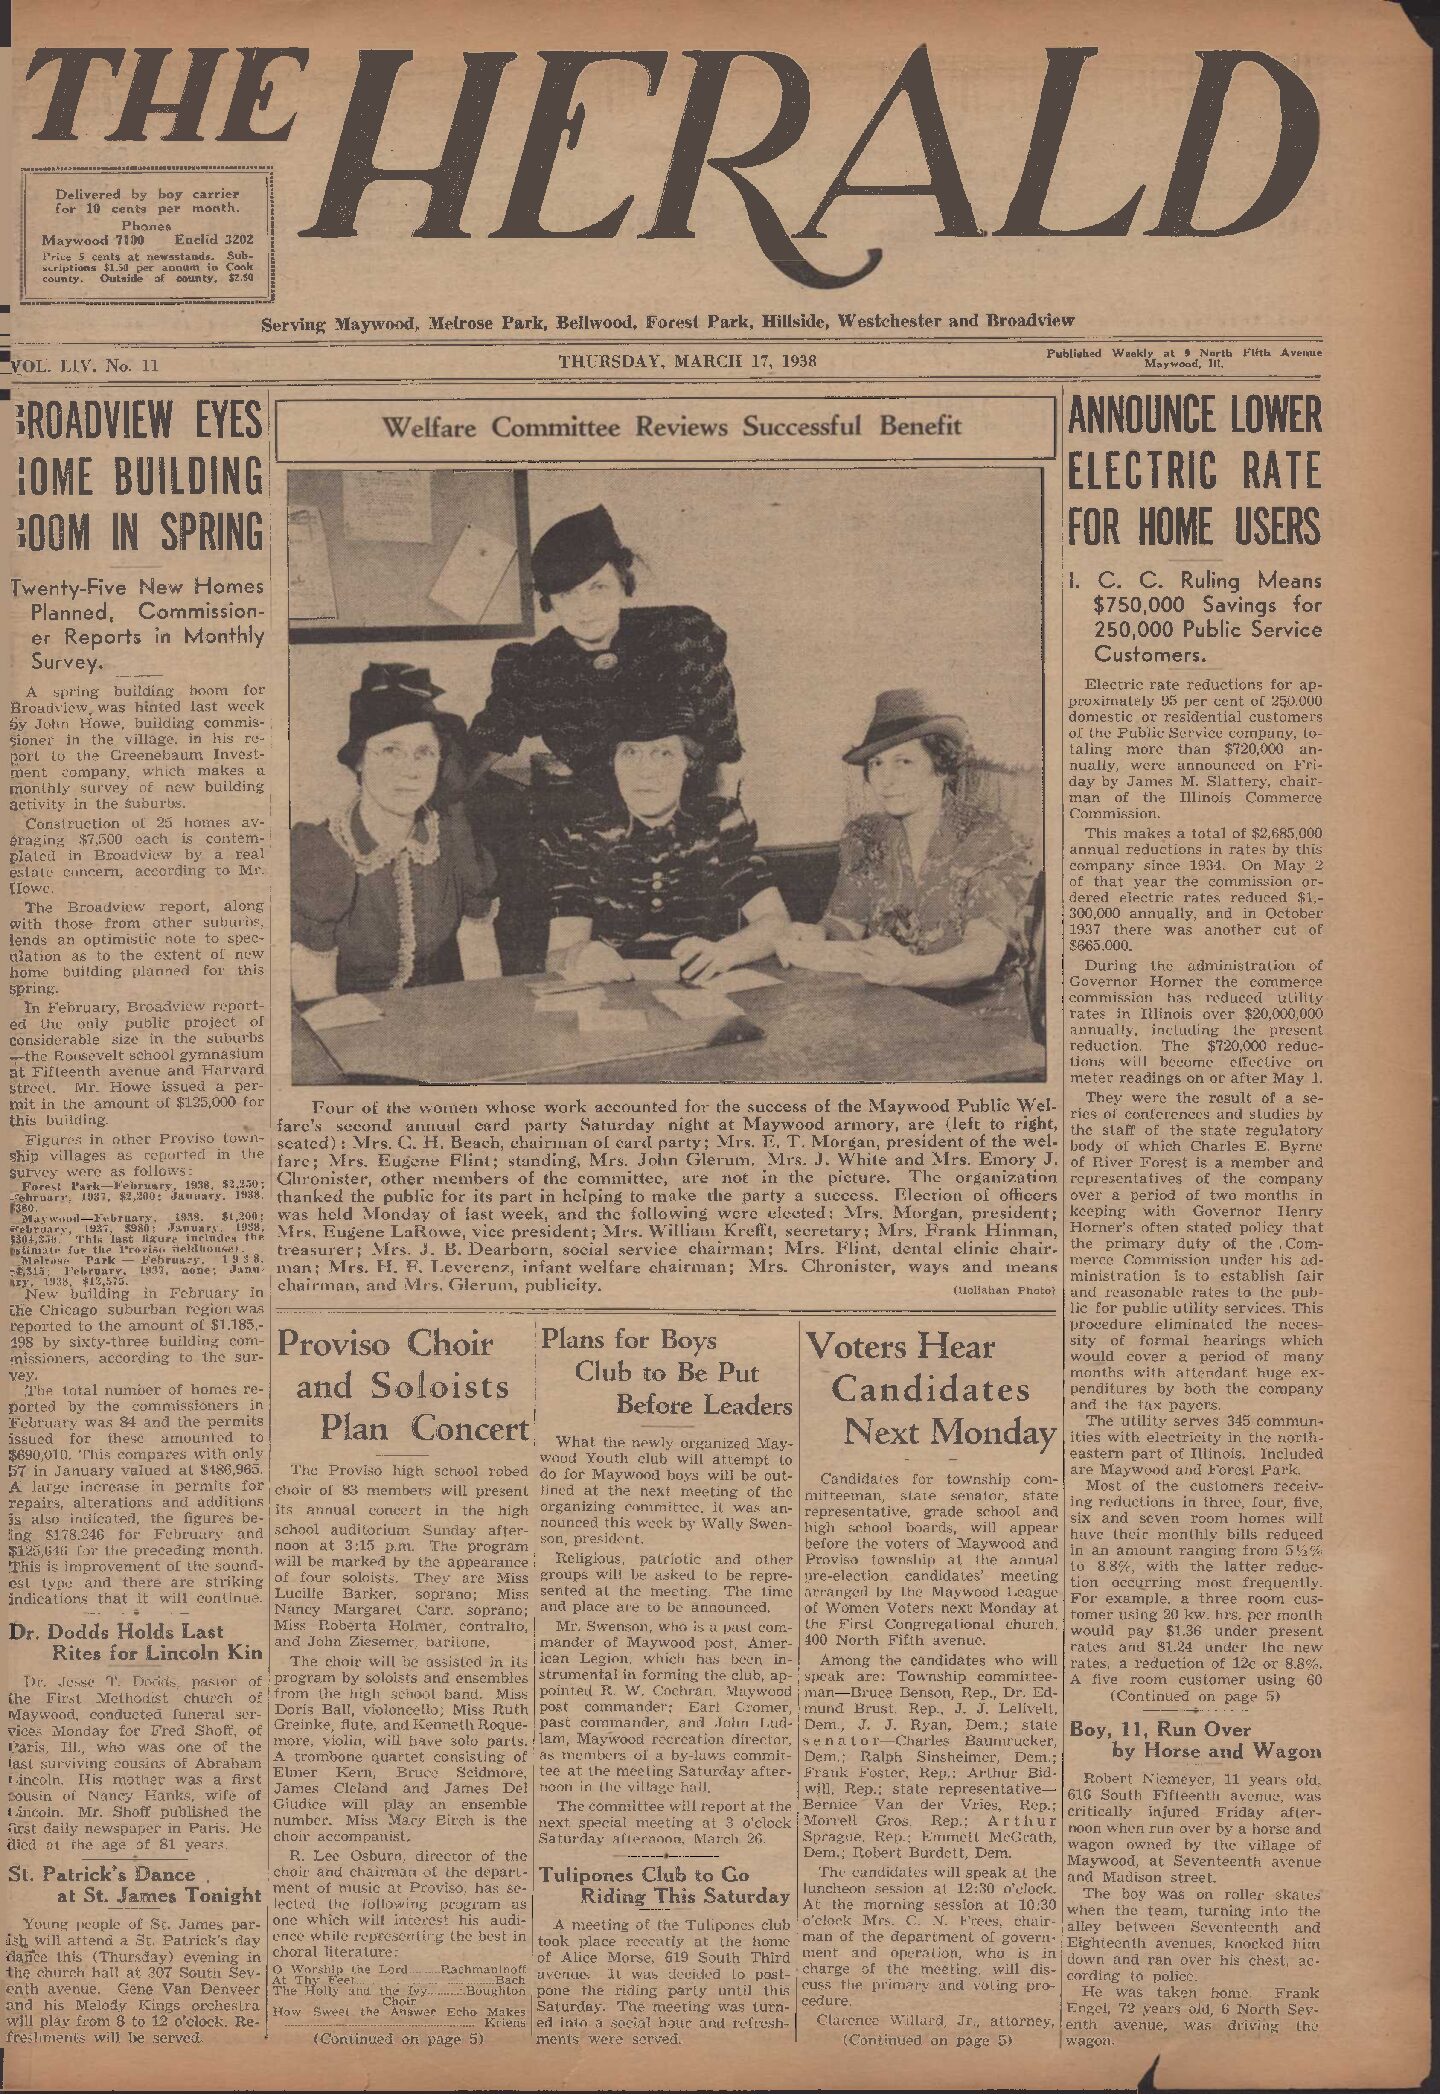 The Herald – 19380317